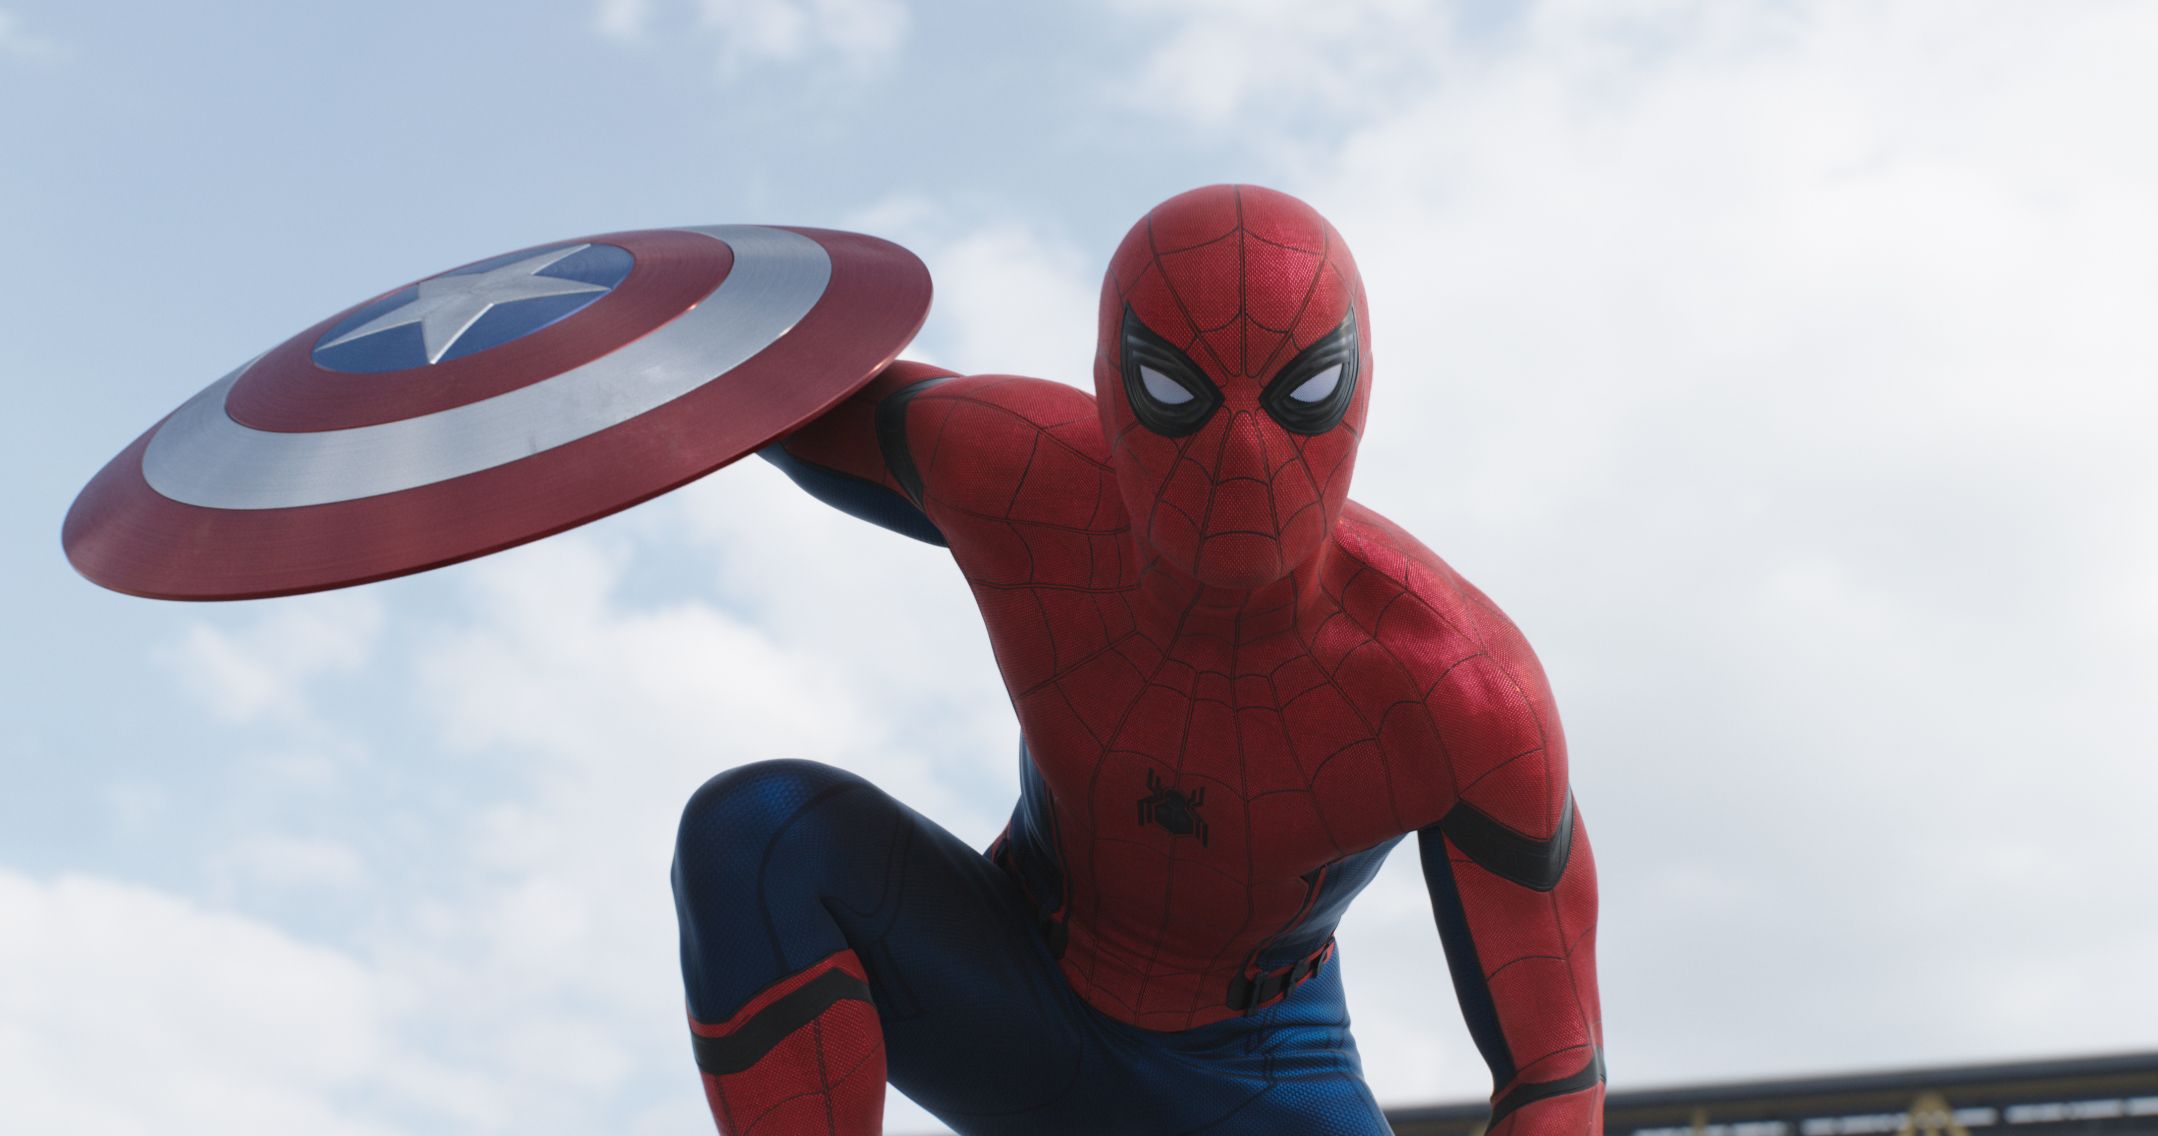 Spider-Man holding Captain America's shield in Captain America Civil War